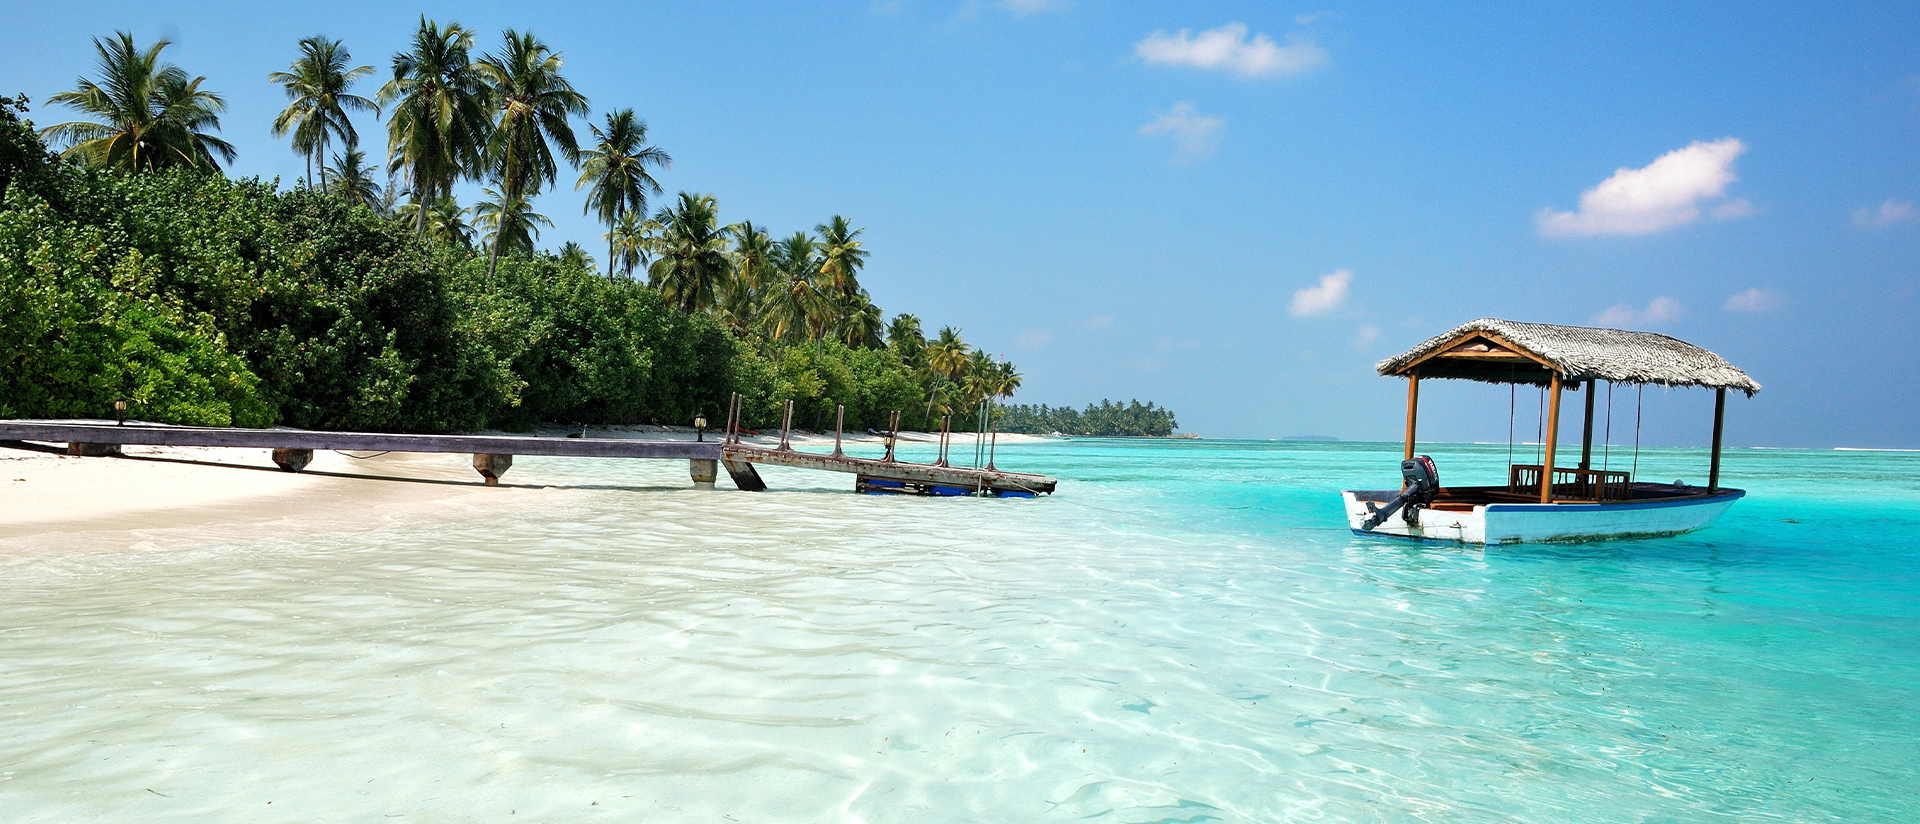 Top 5 All-Inclusive Resorts in the Maldives